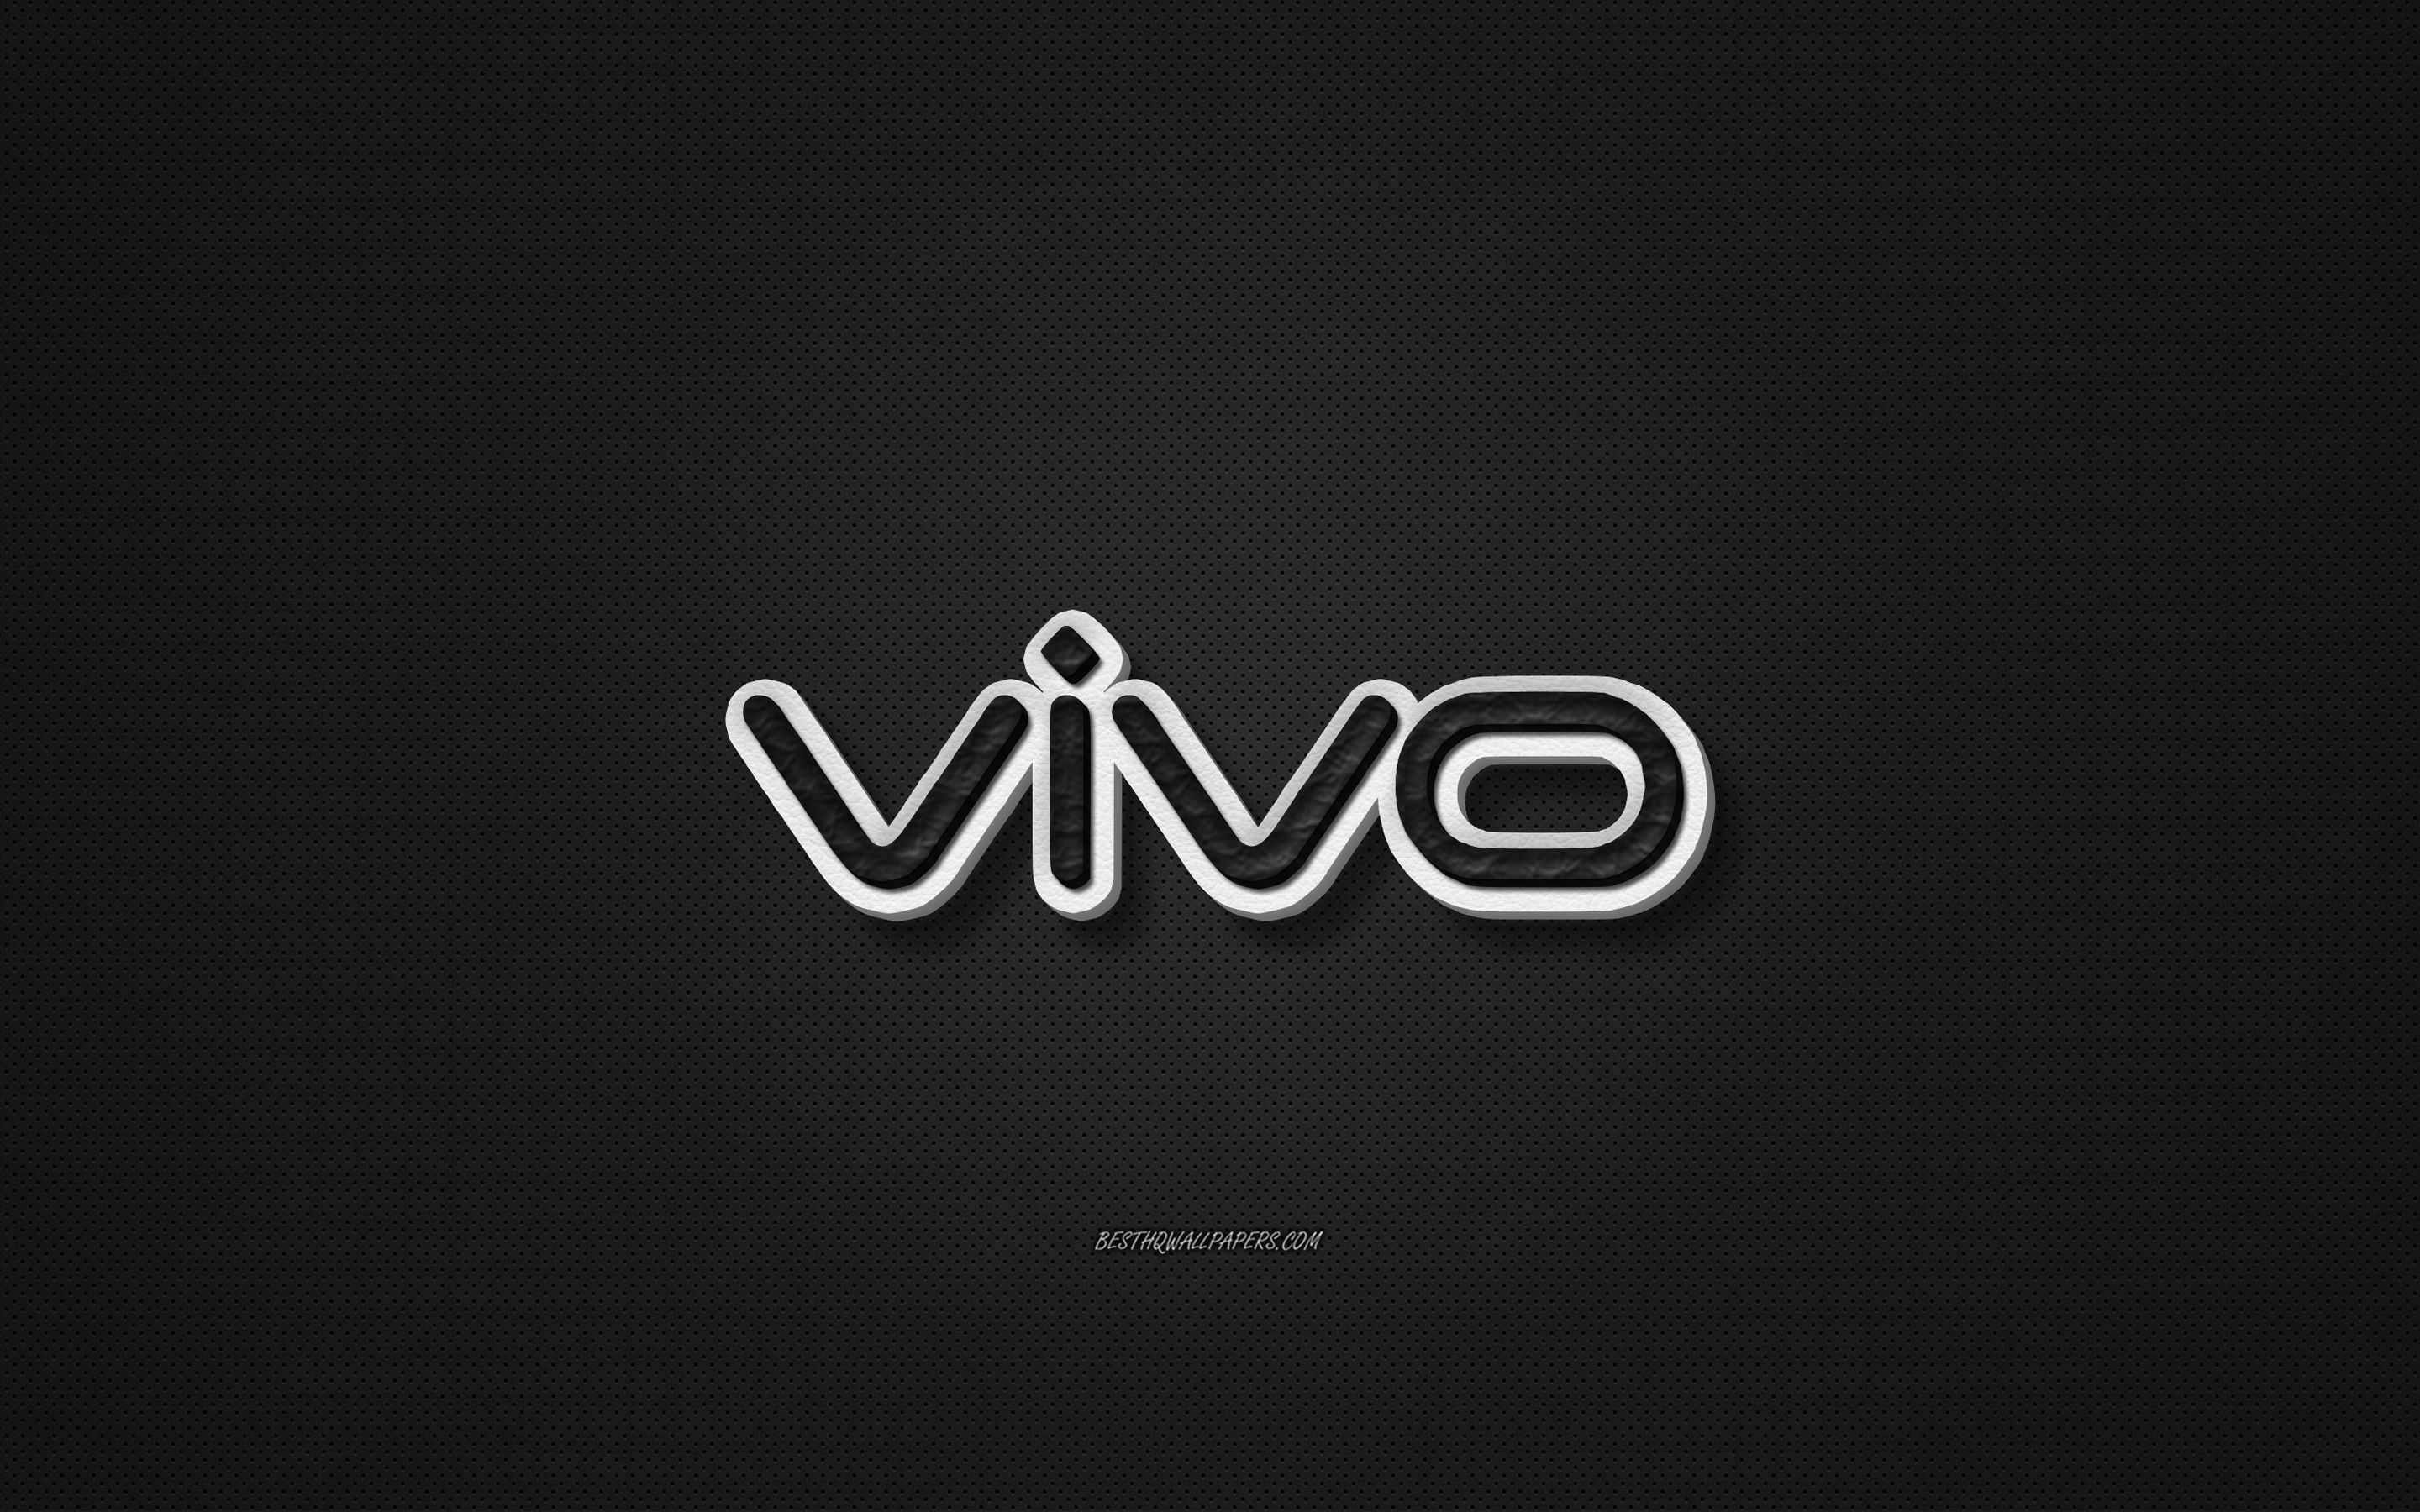 Download wallpaper Vivo leather logo, black leather texture